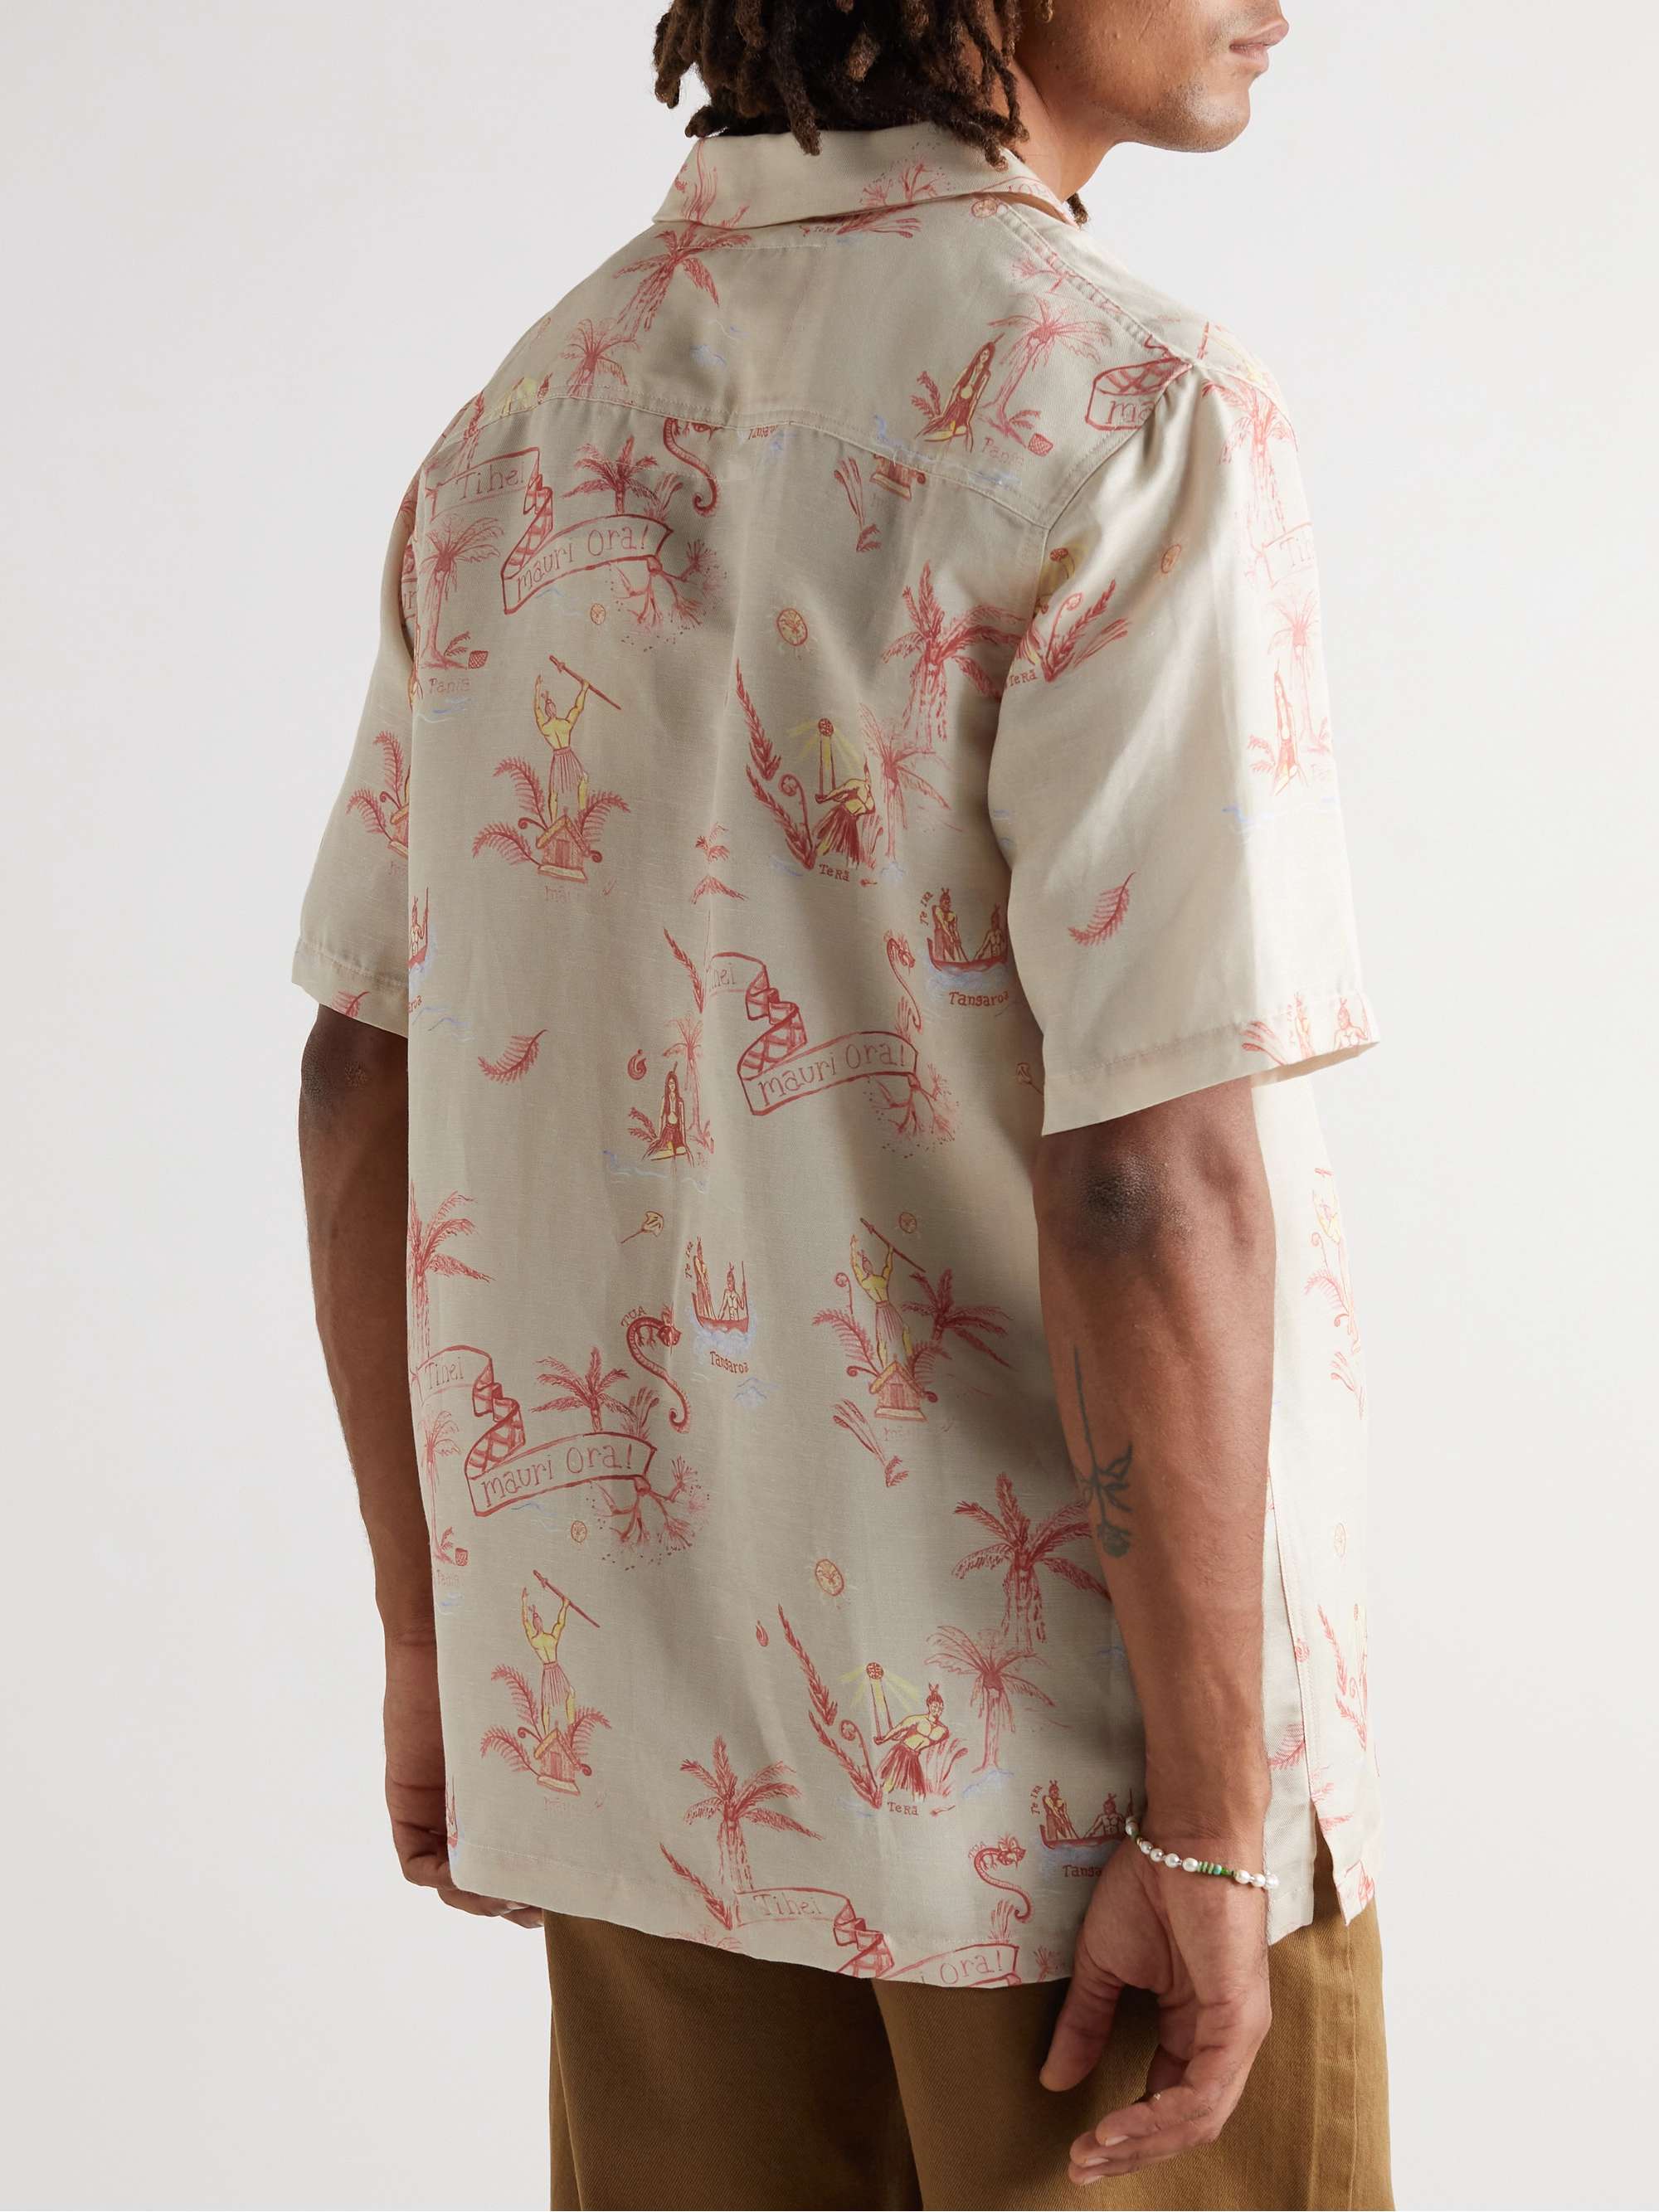 MANAAKI Mana Camp-Collar Printed Lyocell and Linen-Blend Twill Shirt